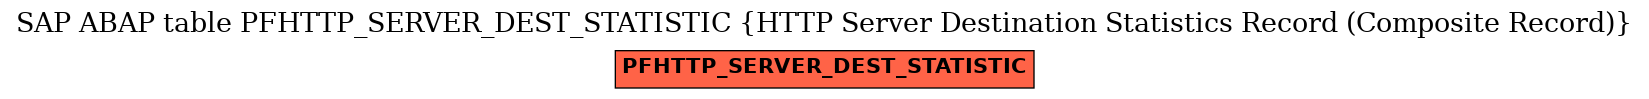 E-R Diagram for table PFHTTP_SERVER_DEST_STATISTIC (HTTP Server Destination Statistics Record (Composite Record))